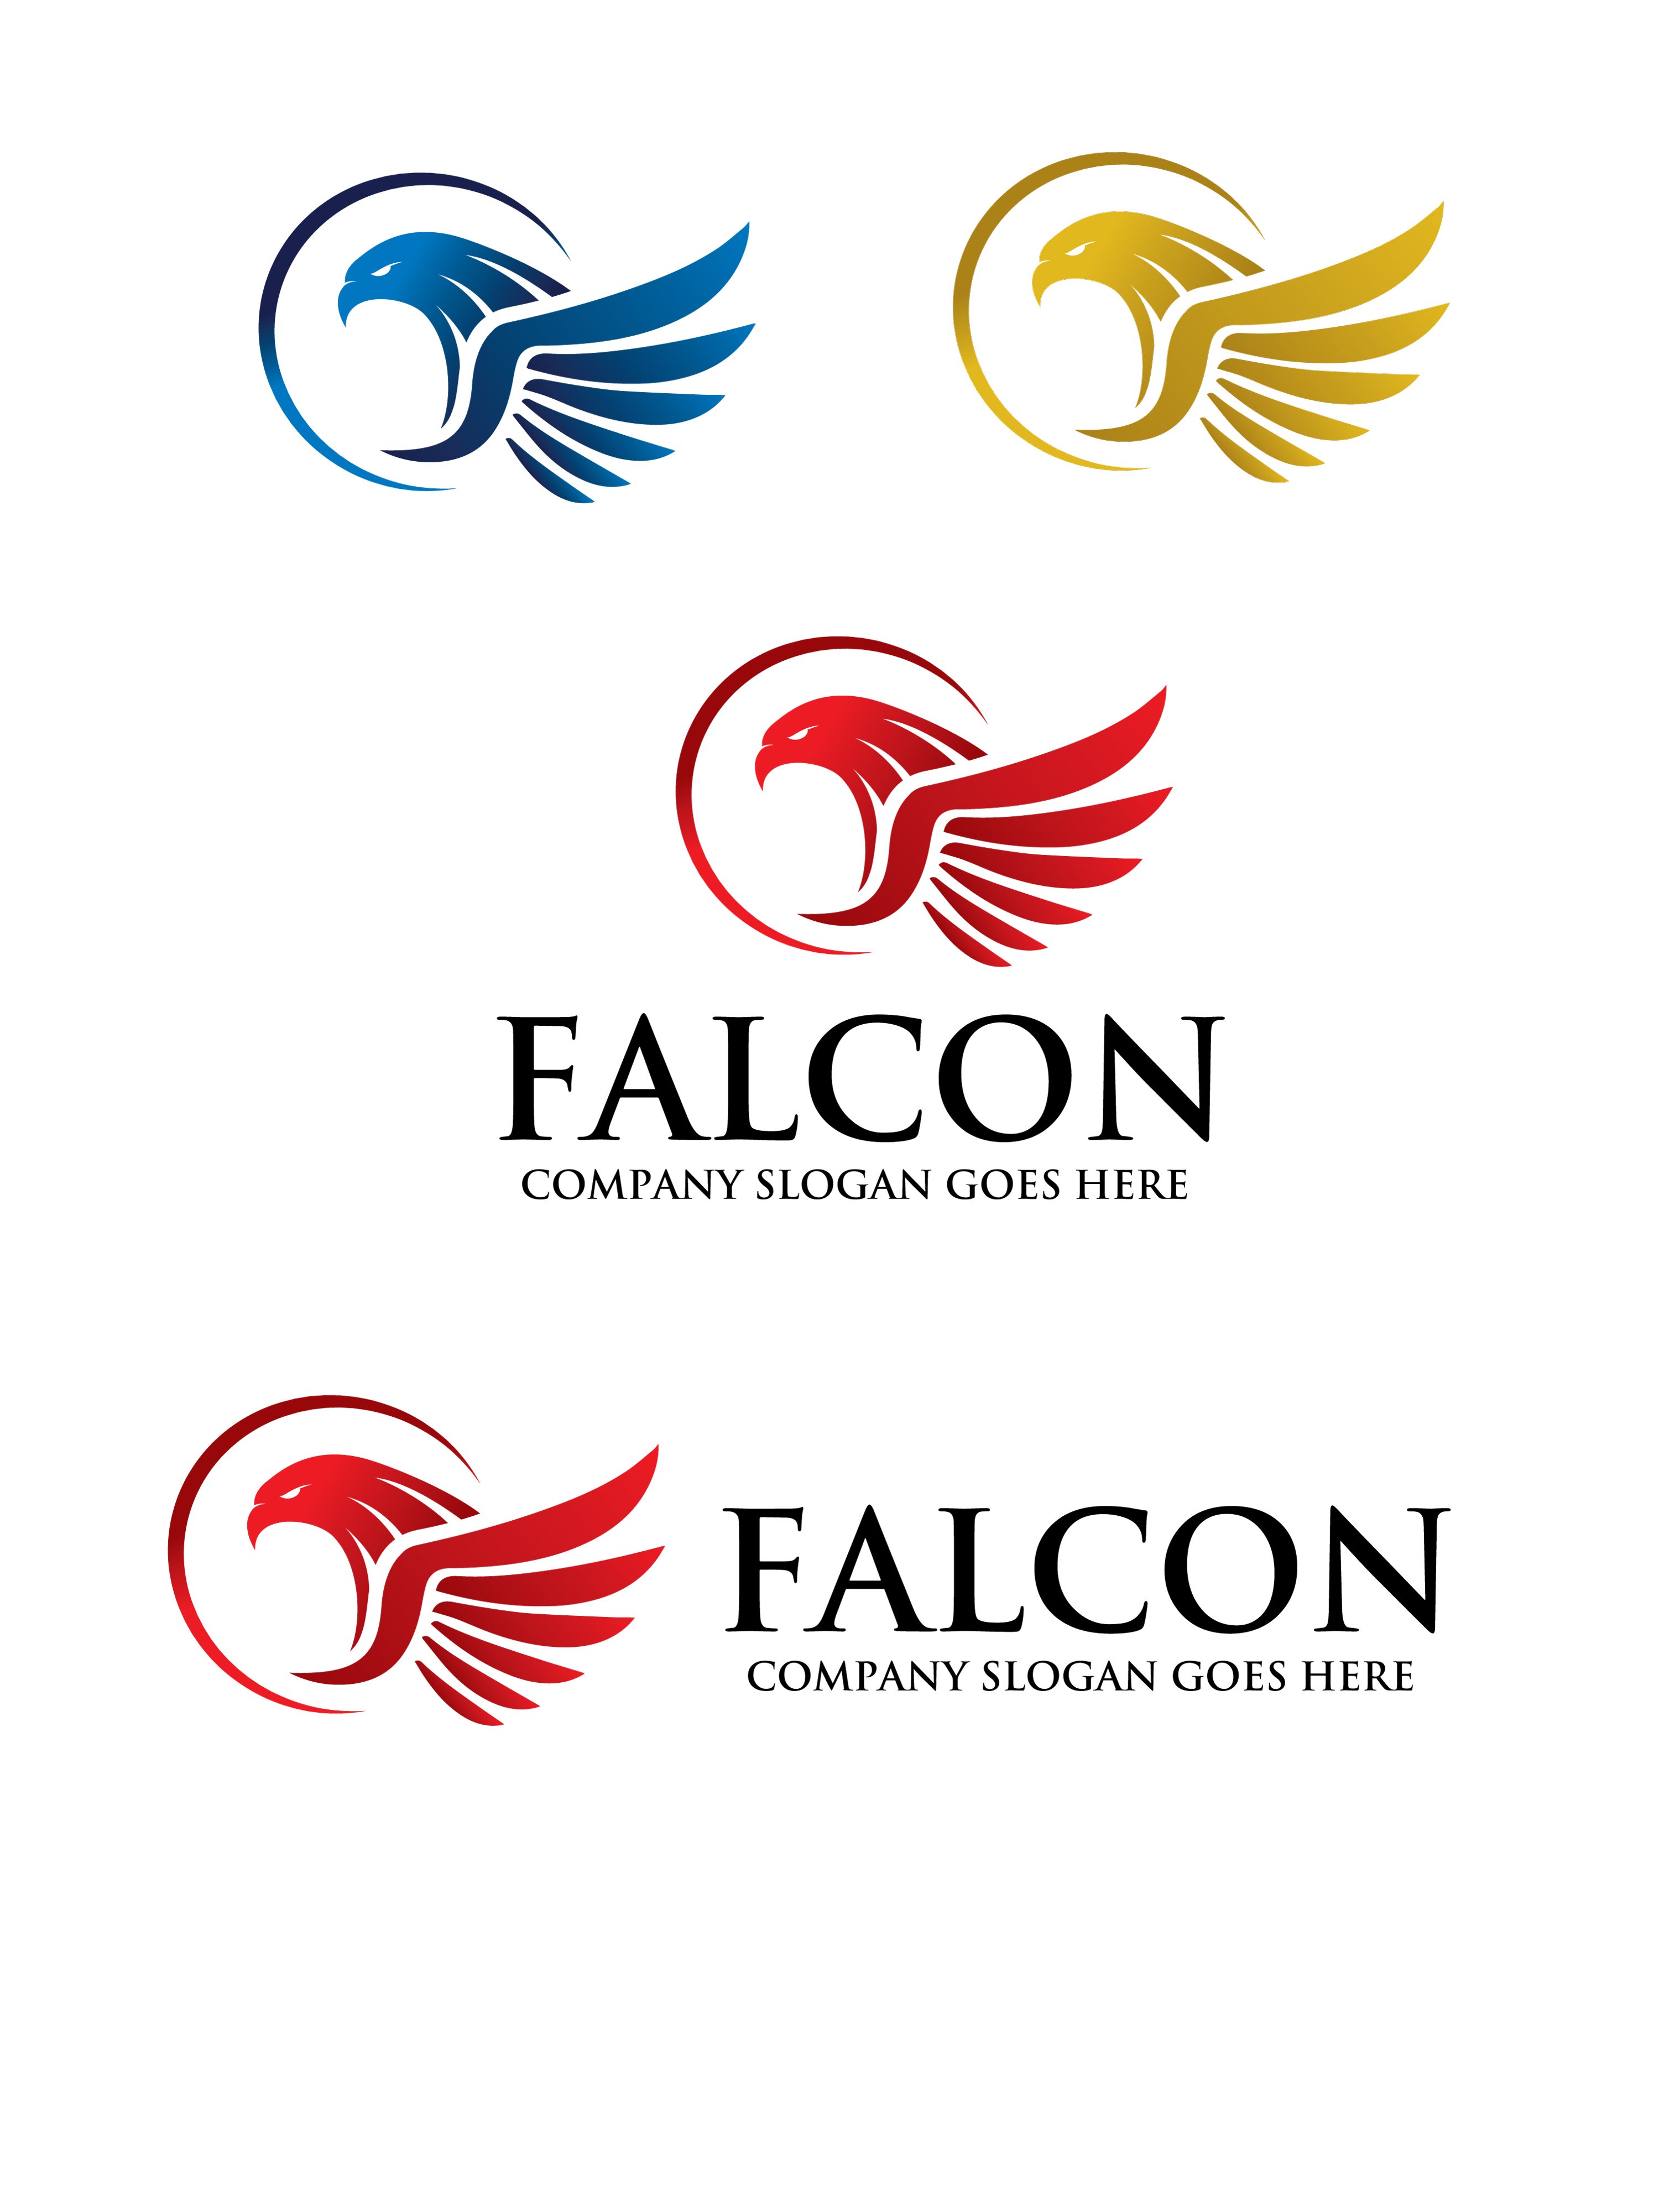 Falcon logo cover image.